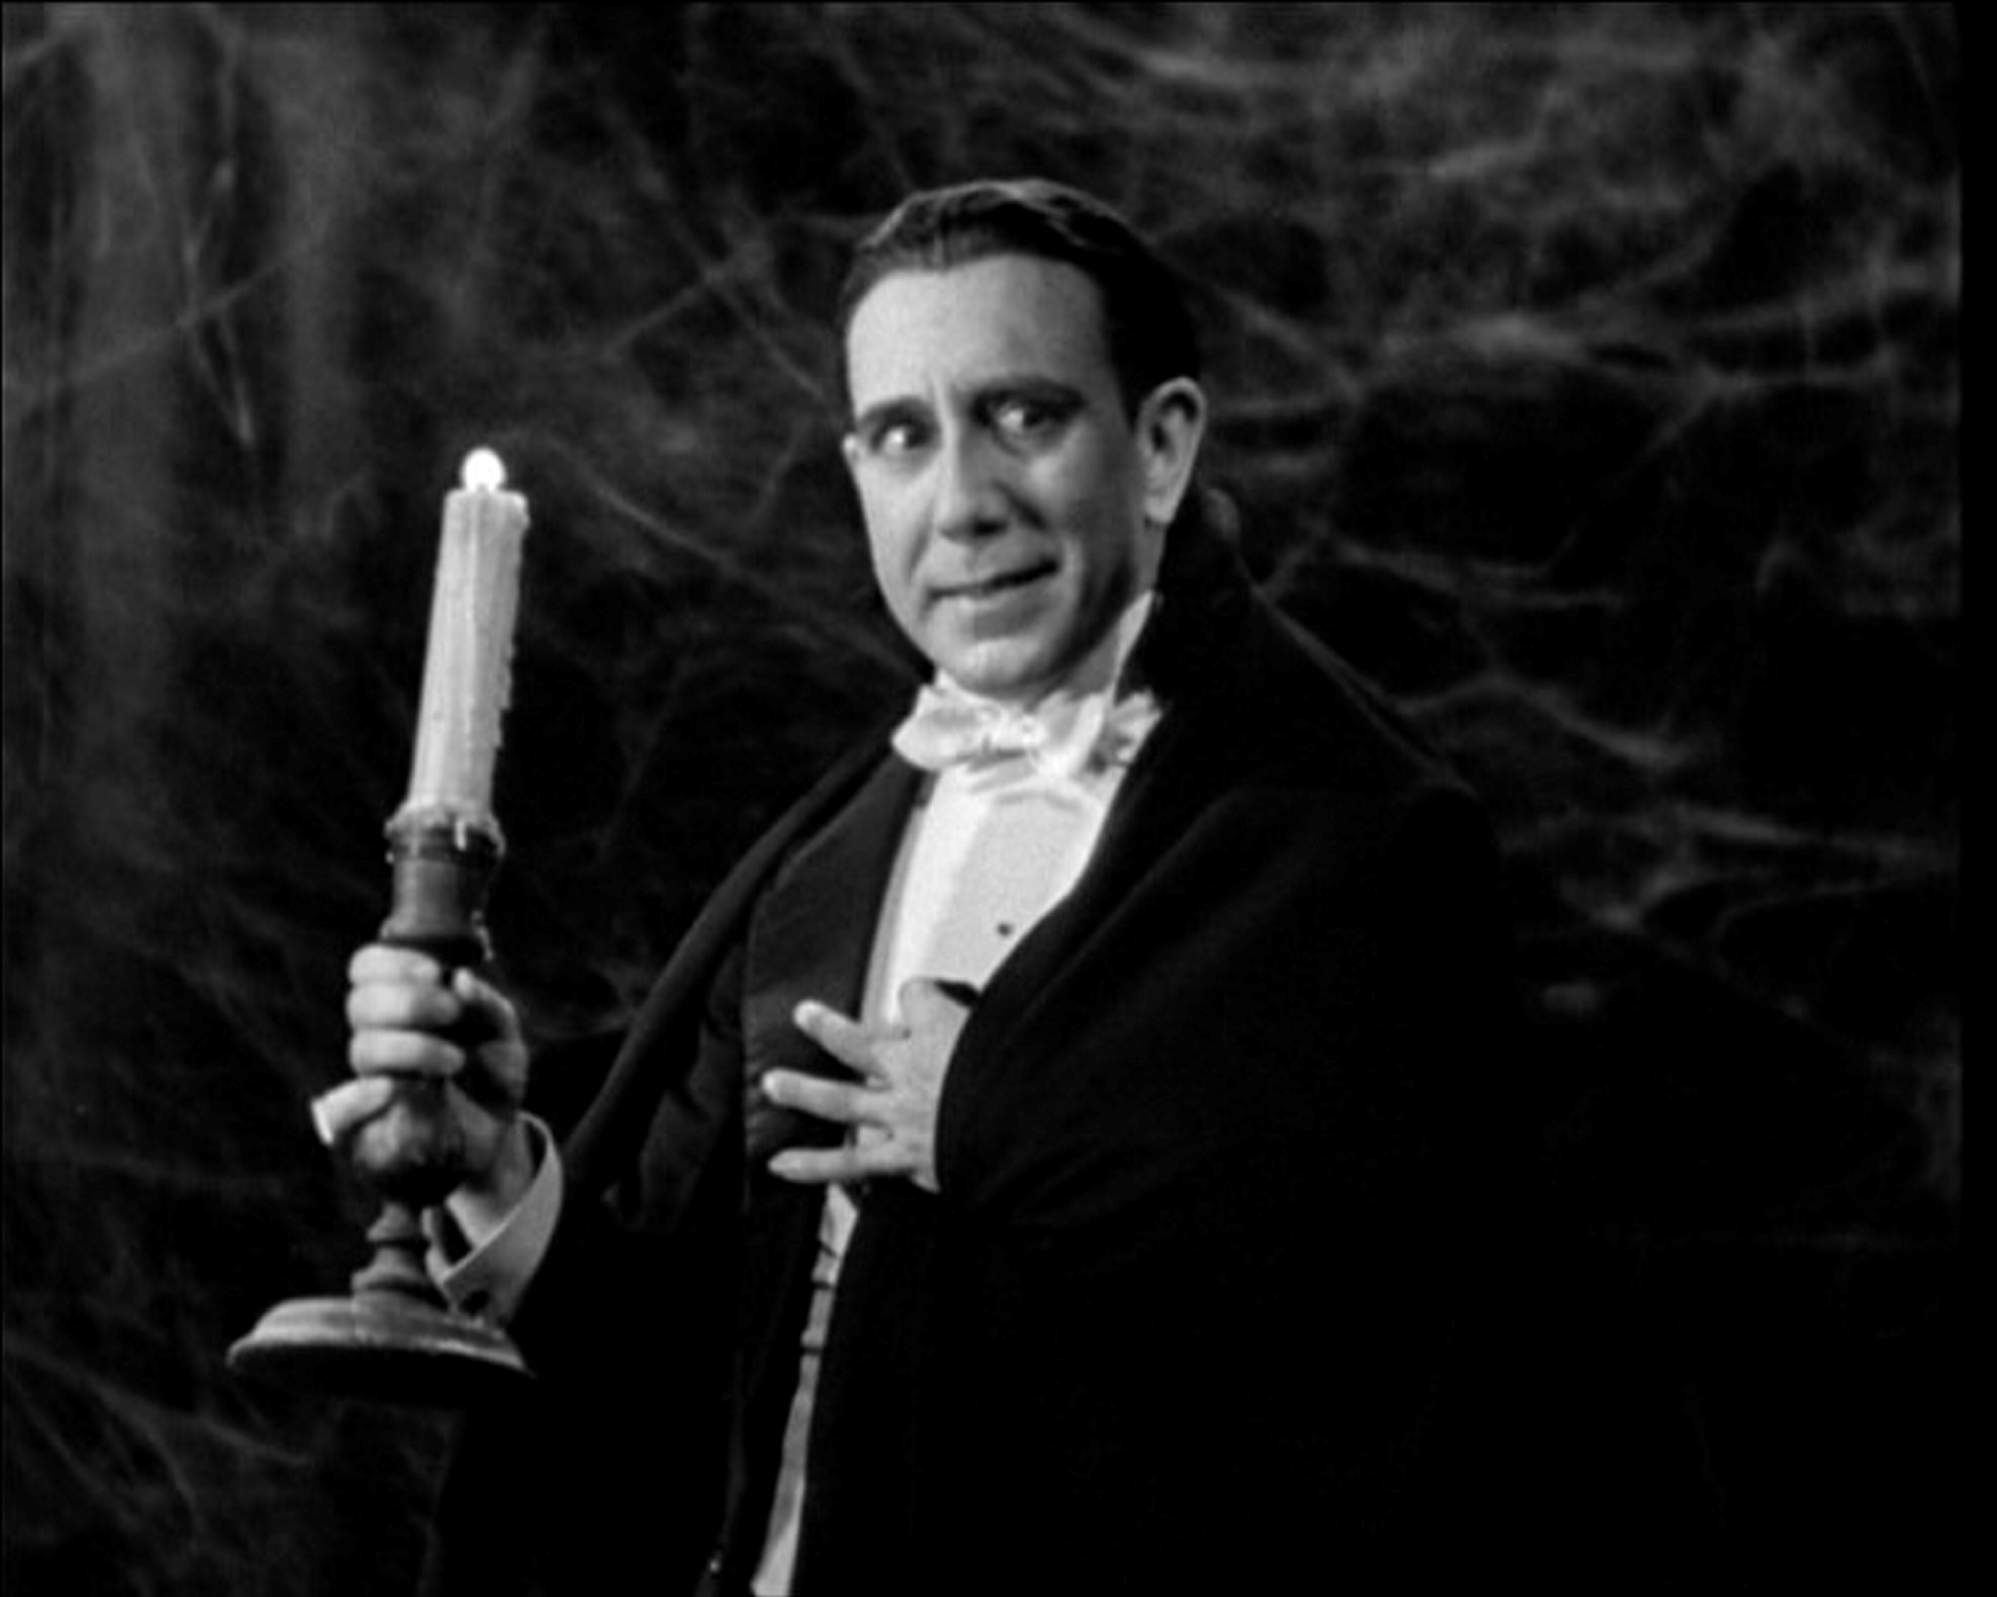 Carlos Villarias as Count Dracula in Dracula (1931)